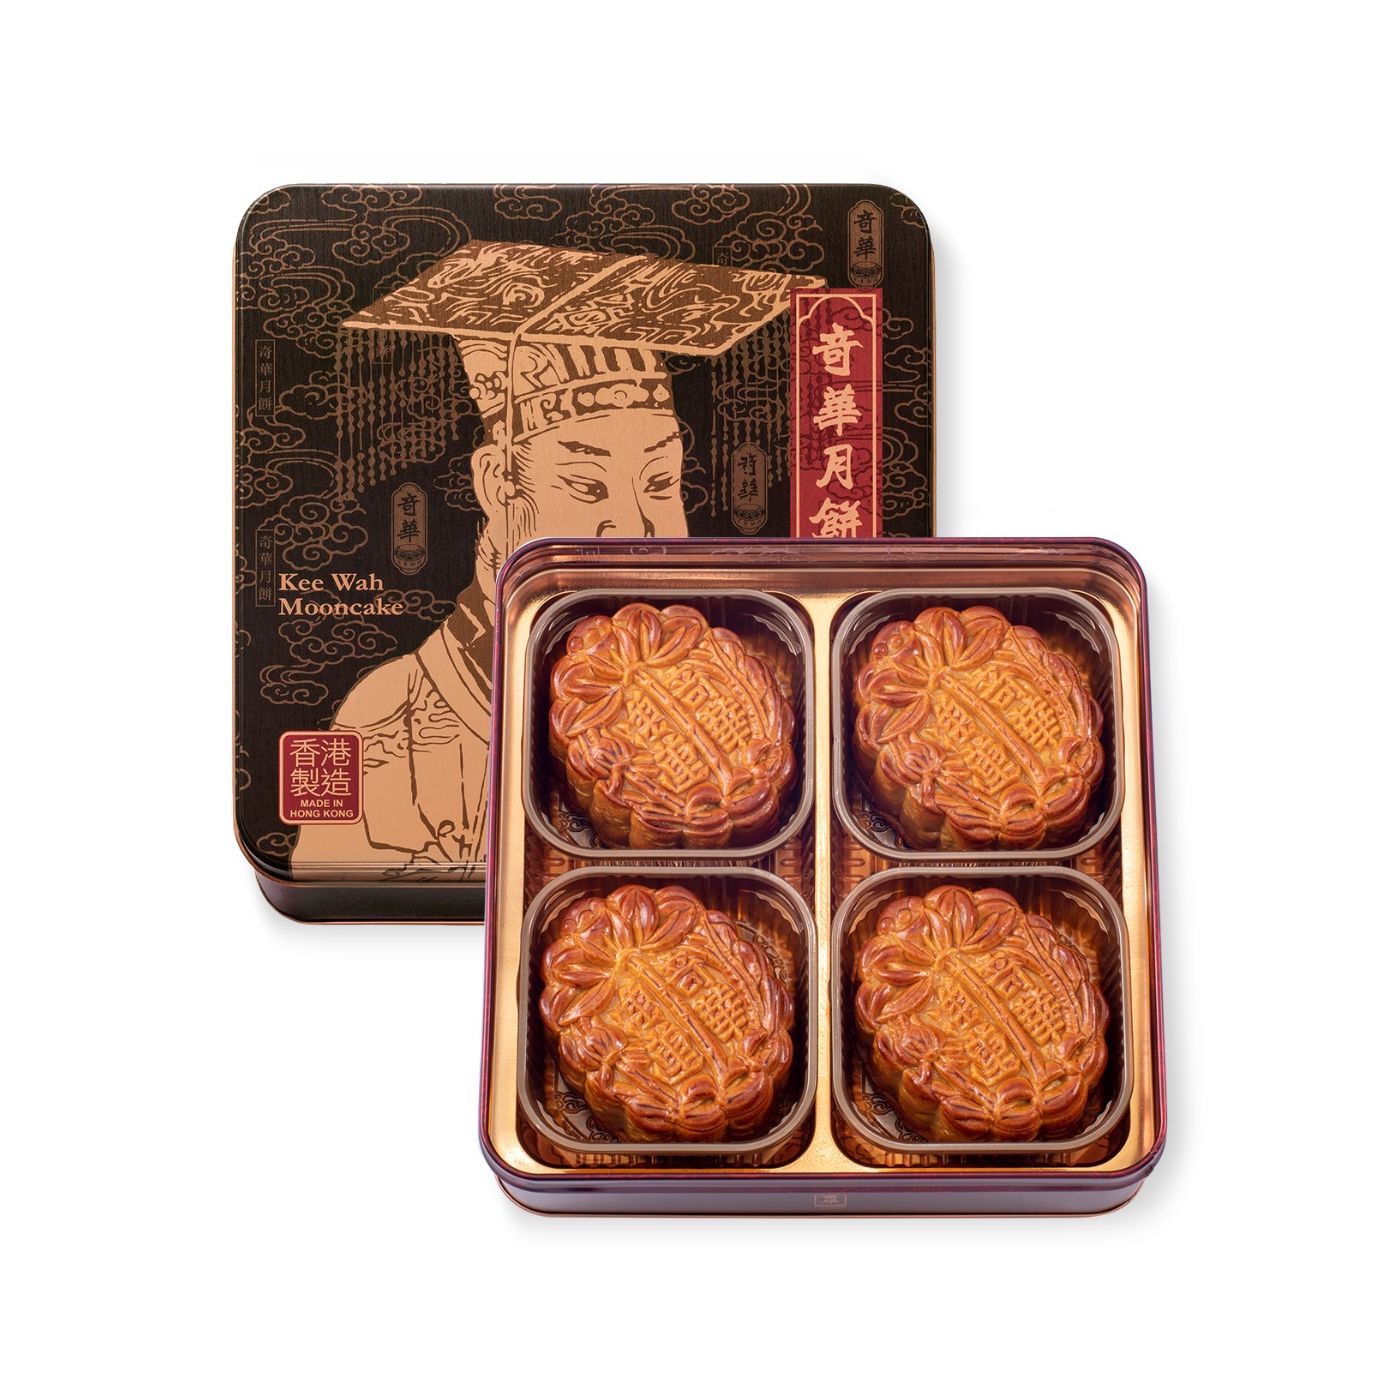 KEE WAH Golden Lotus Seed Paste Mooncake (4pcs) 奇華 純正金黃蓮蓉月餅 (4個裝)